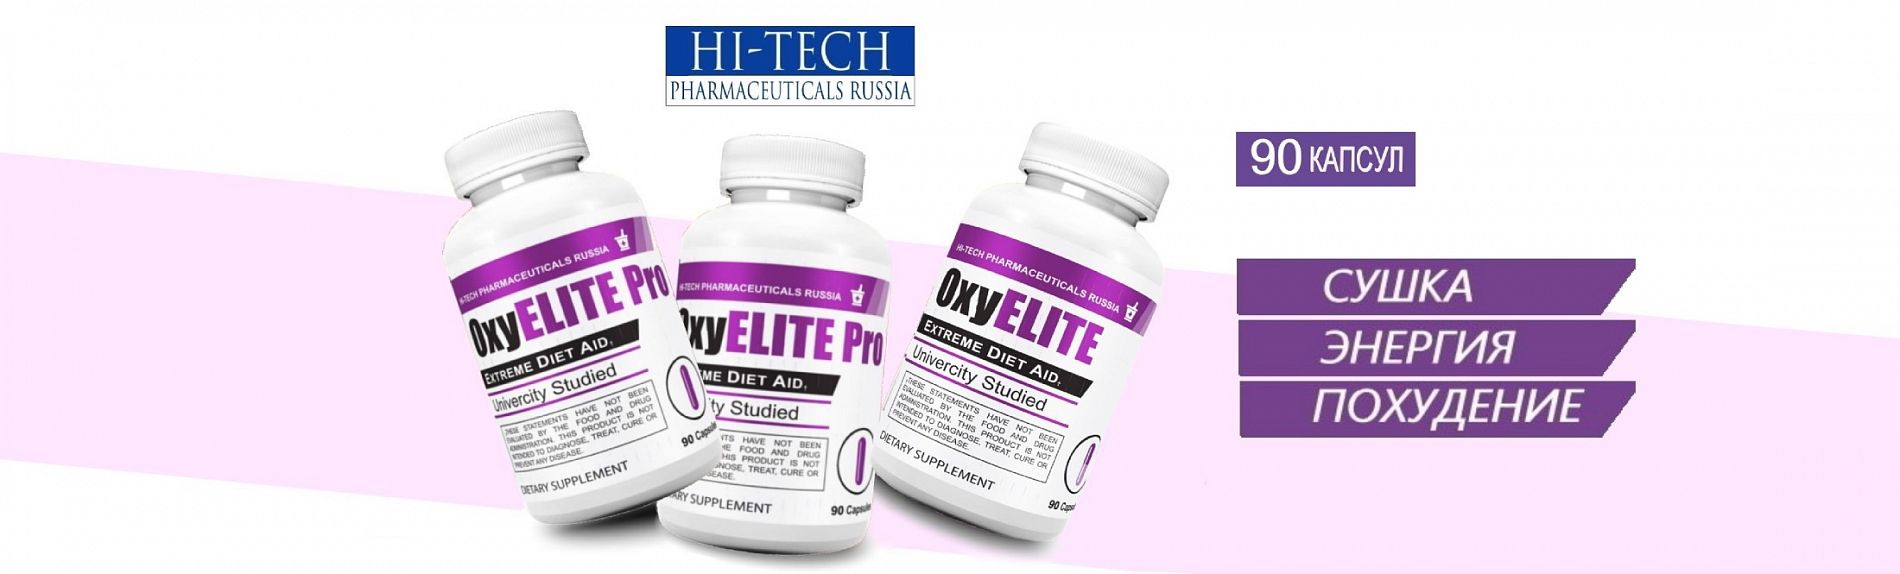 OxyElite (Hi-Tech Pharmaceuticals Russia)